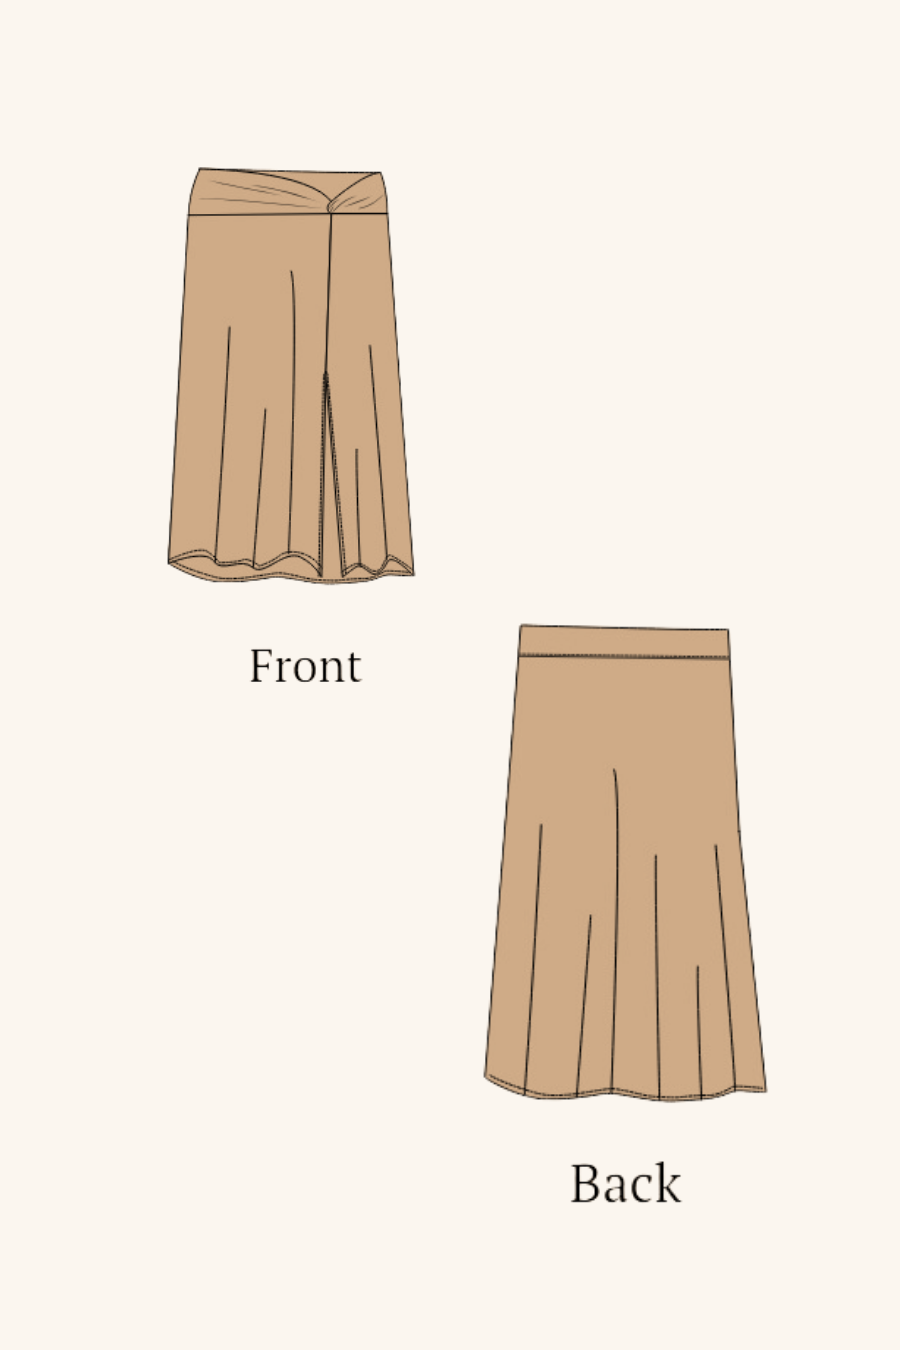 2d sketch of twist knot skirt